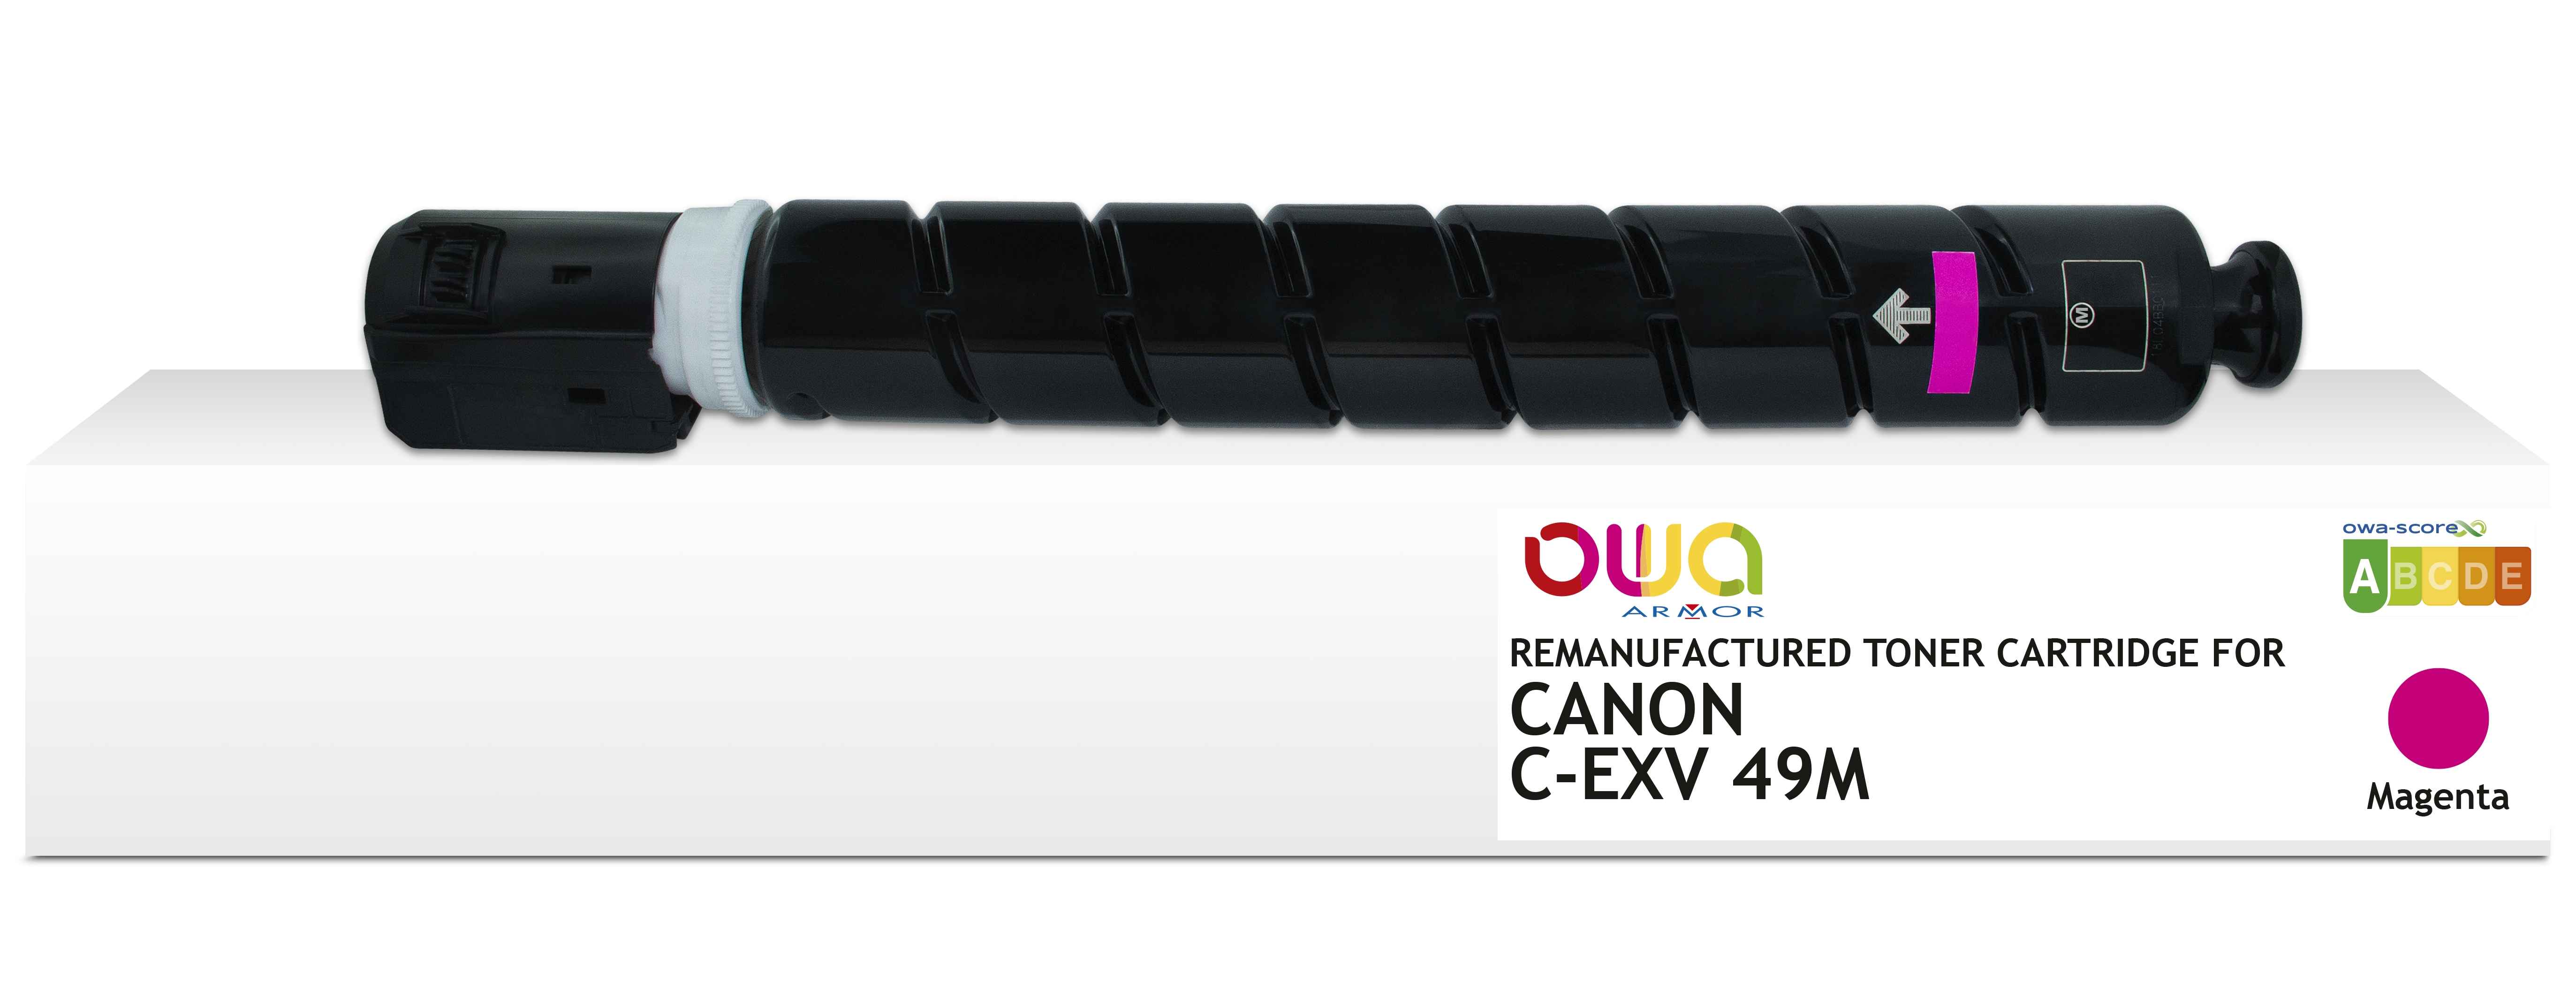 OWA Armor toner kompatibilní s Canon C-EXV49M, 19000st, červená/magenta